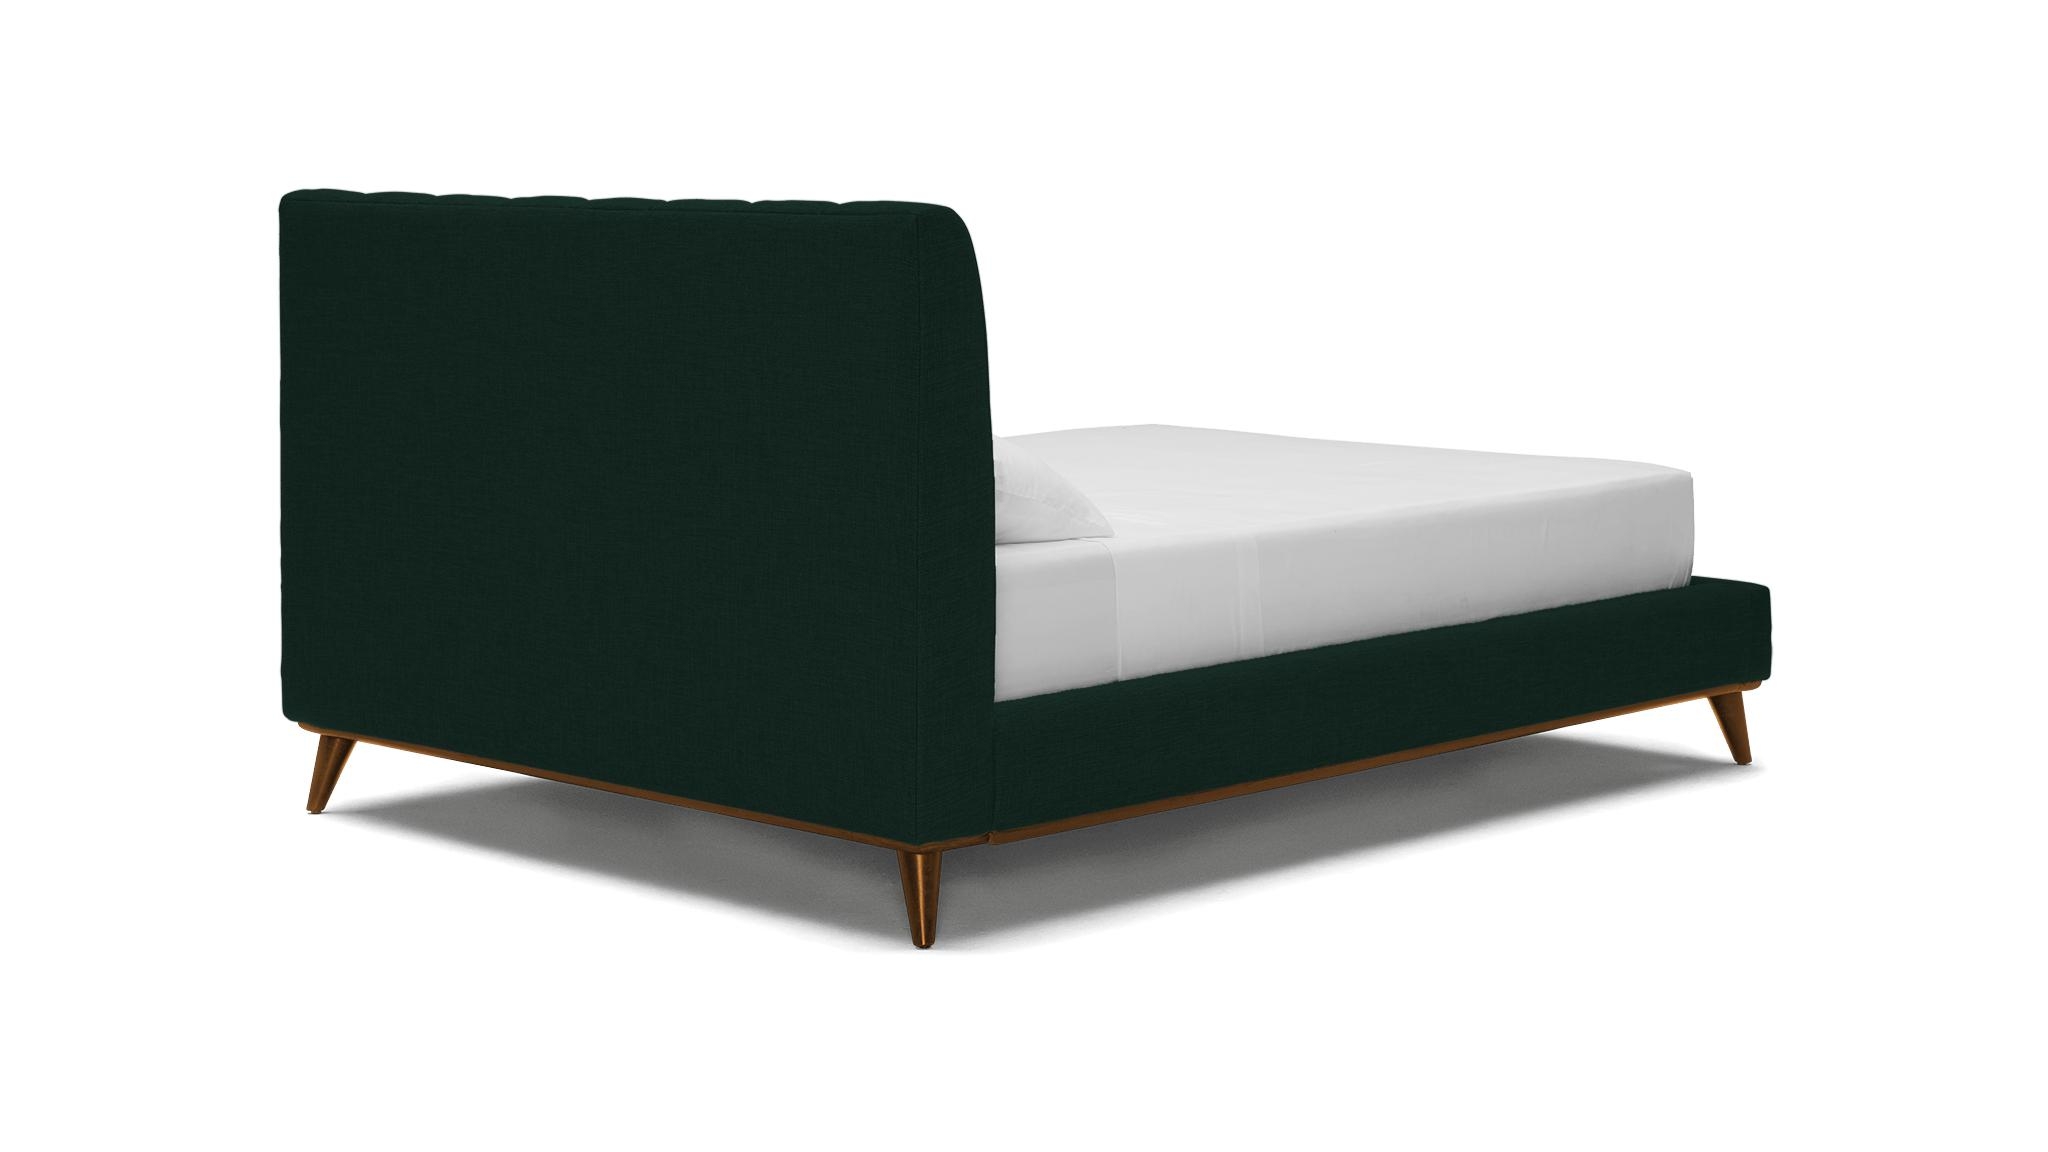 Green Hughes Mid Century Modern Bed - Royale Evergreen - Mocha - Eastern King - Image 3